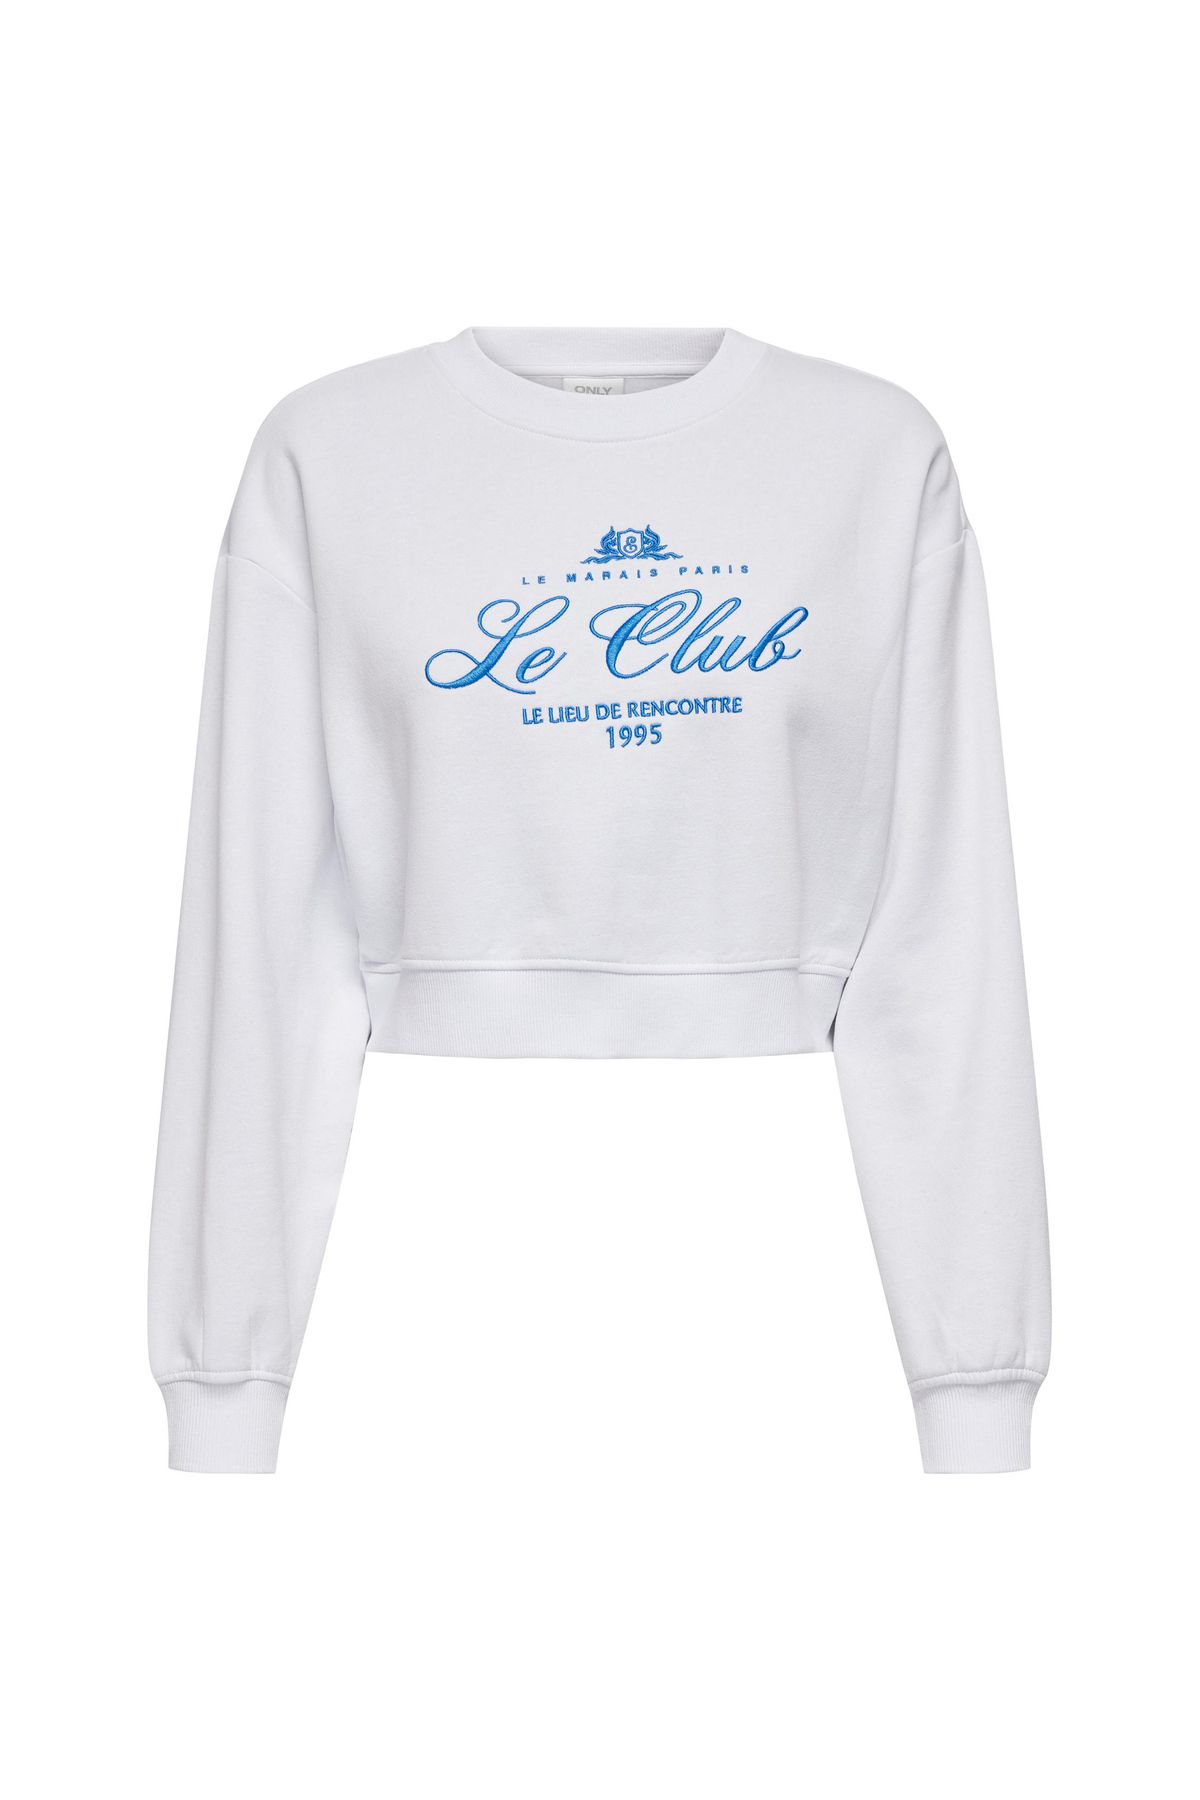 Only Lyrsa Kadın Beyaz Sweatshirt (15304167-BW)